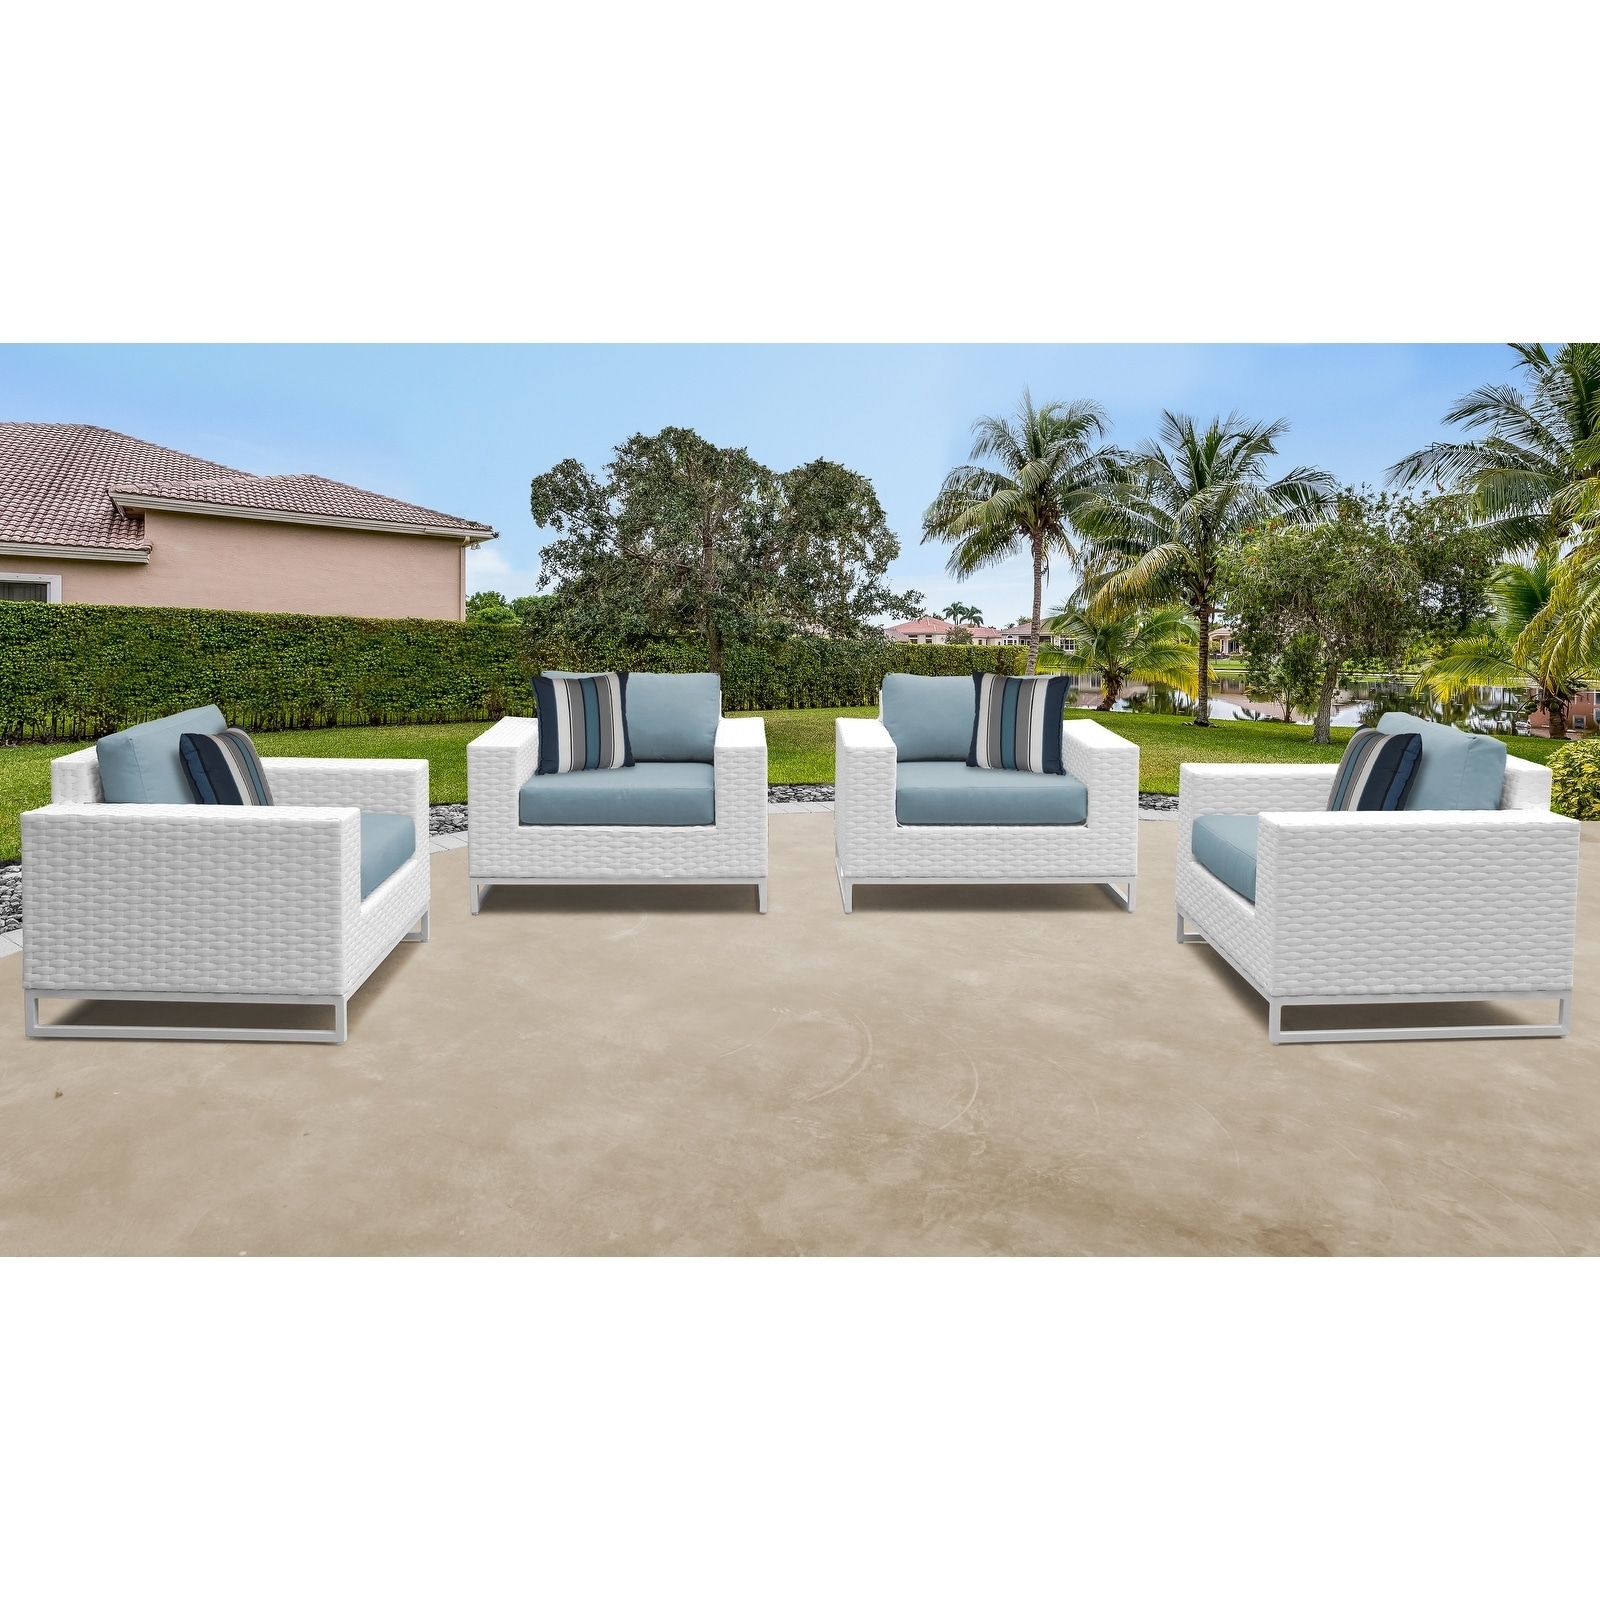 Miami 4 Piece Outdoor Wicker Patio Furniture Set 04a